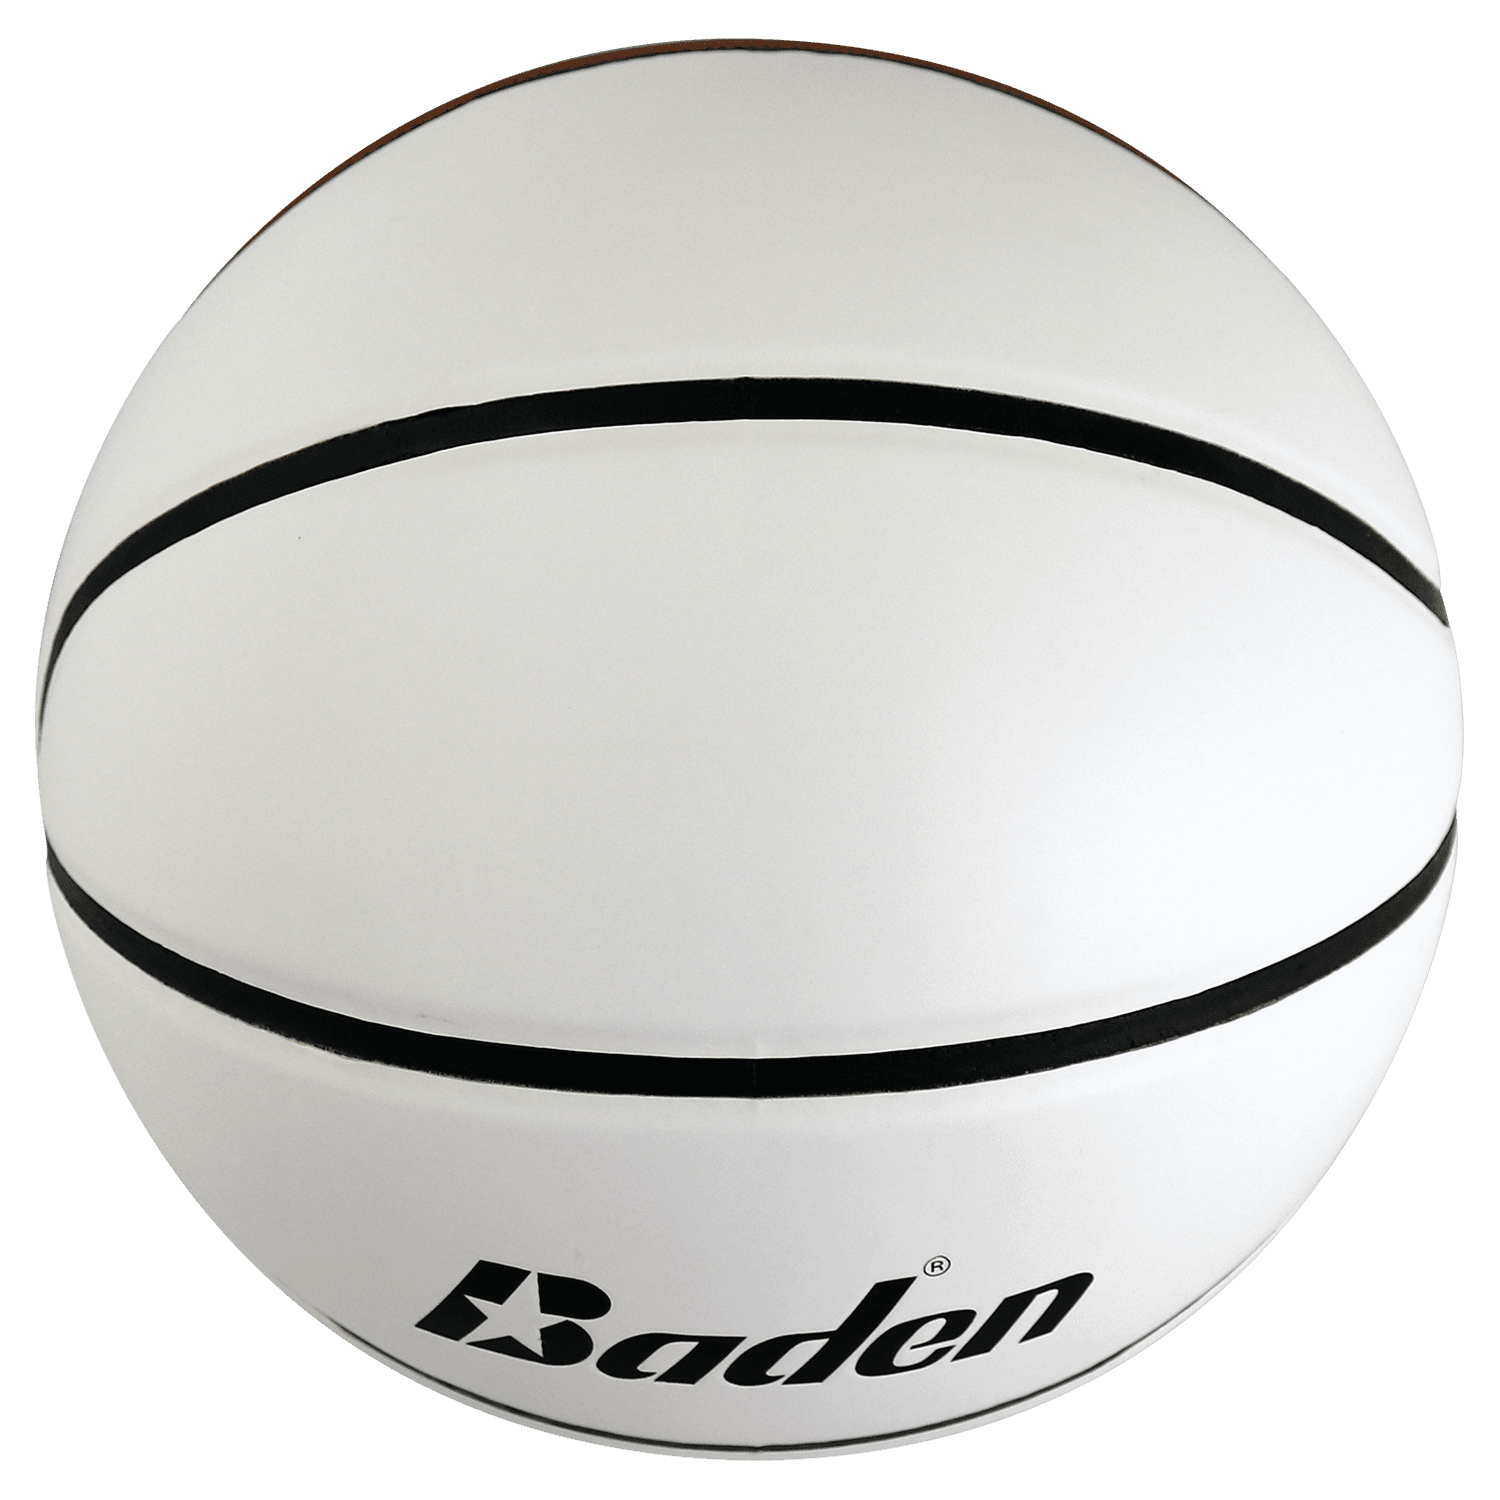 transparent white basketball